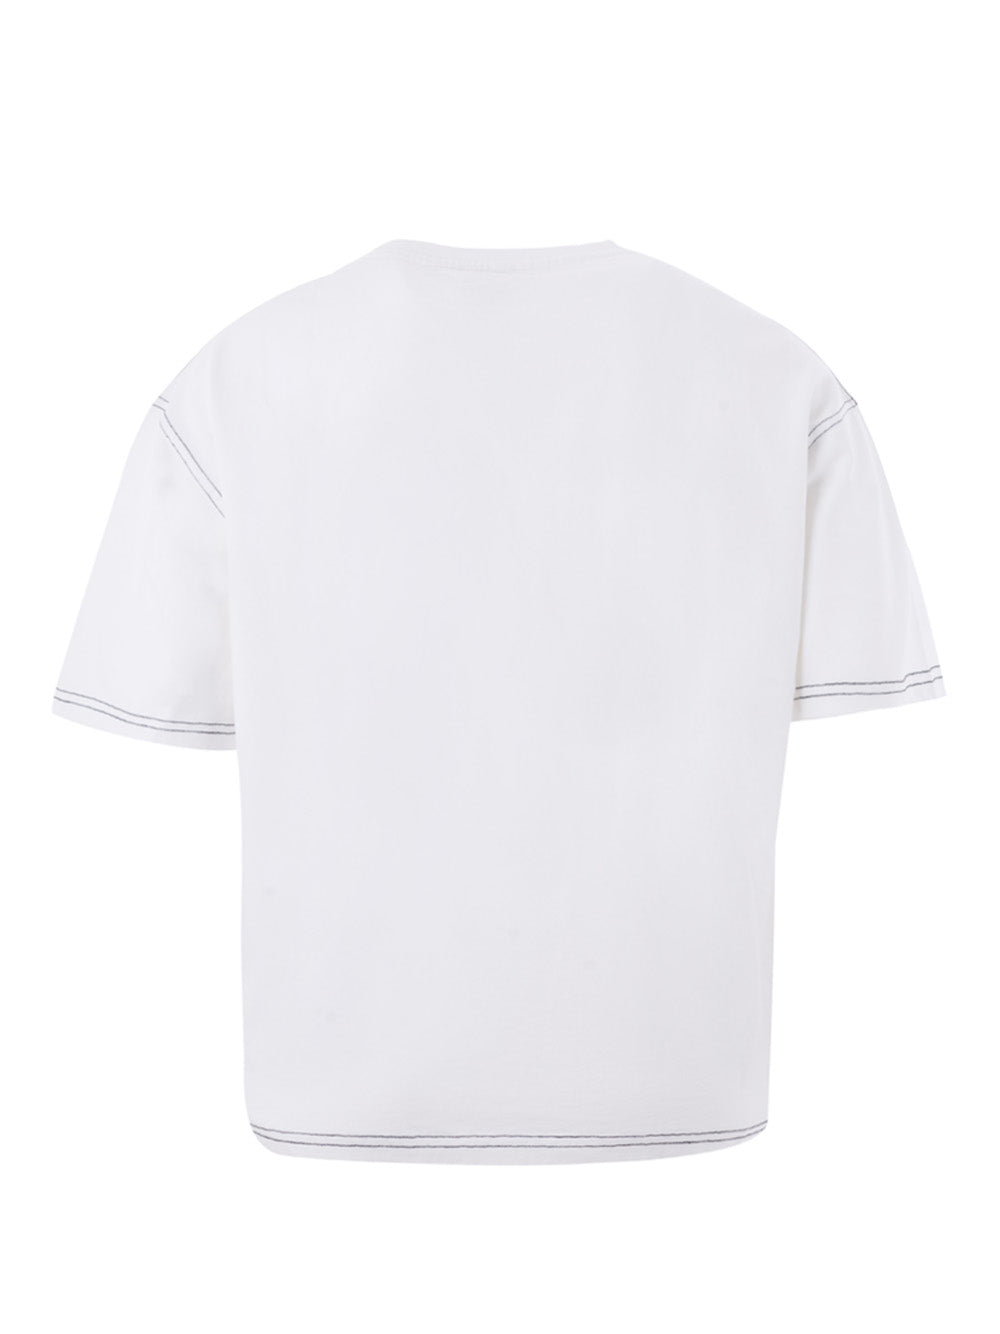 Fashionsarah.com Fashionsarah.com Kenzo White Cotton T-Shirt with Front Print